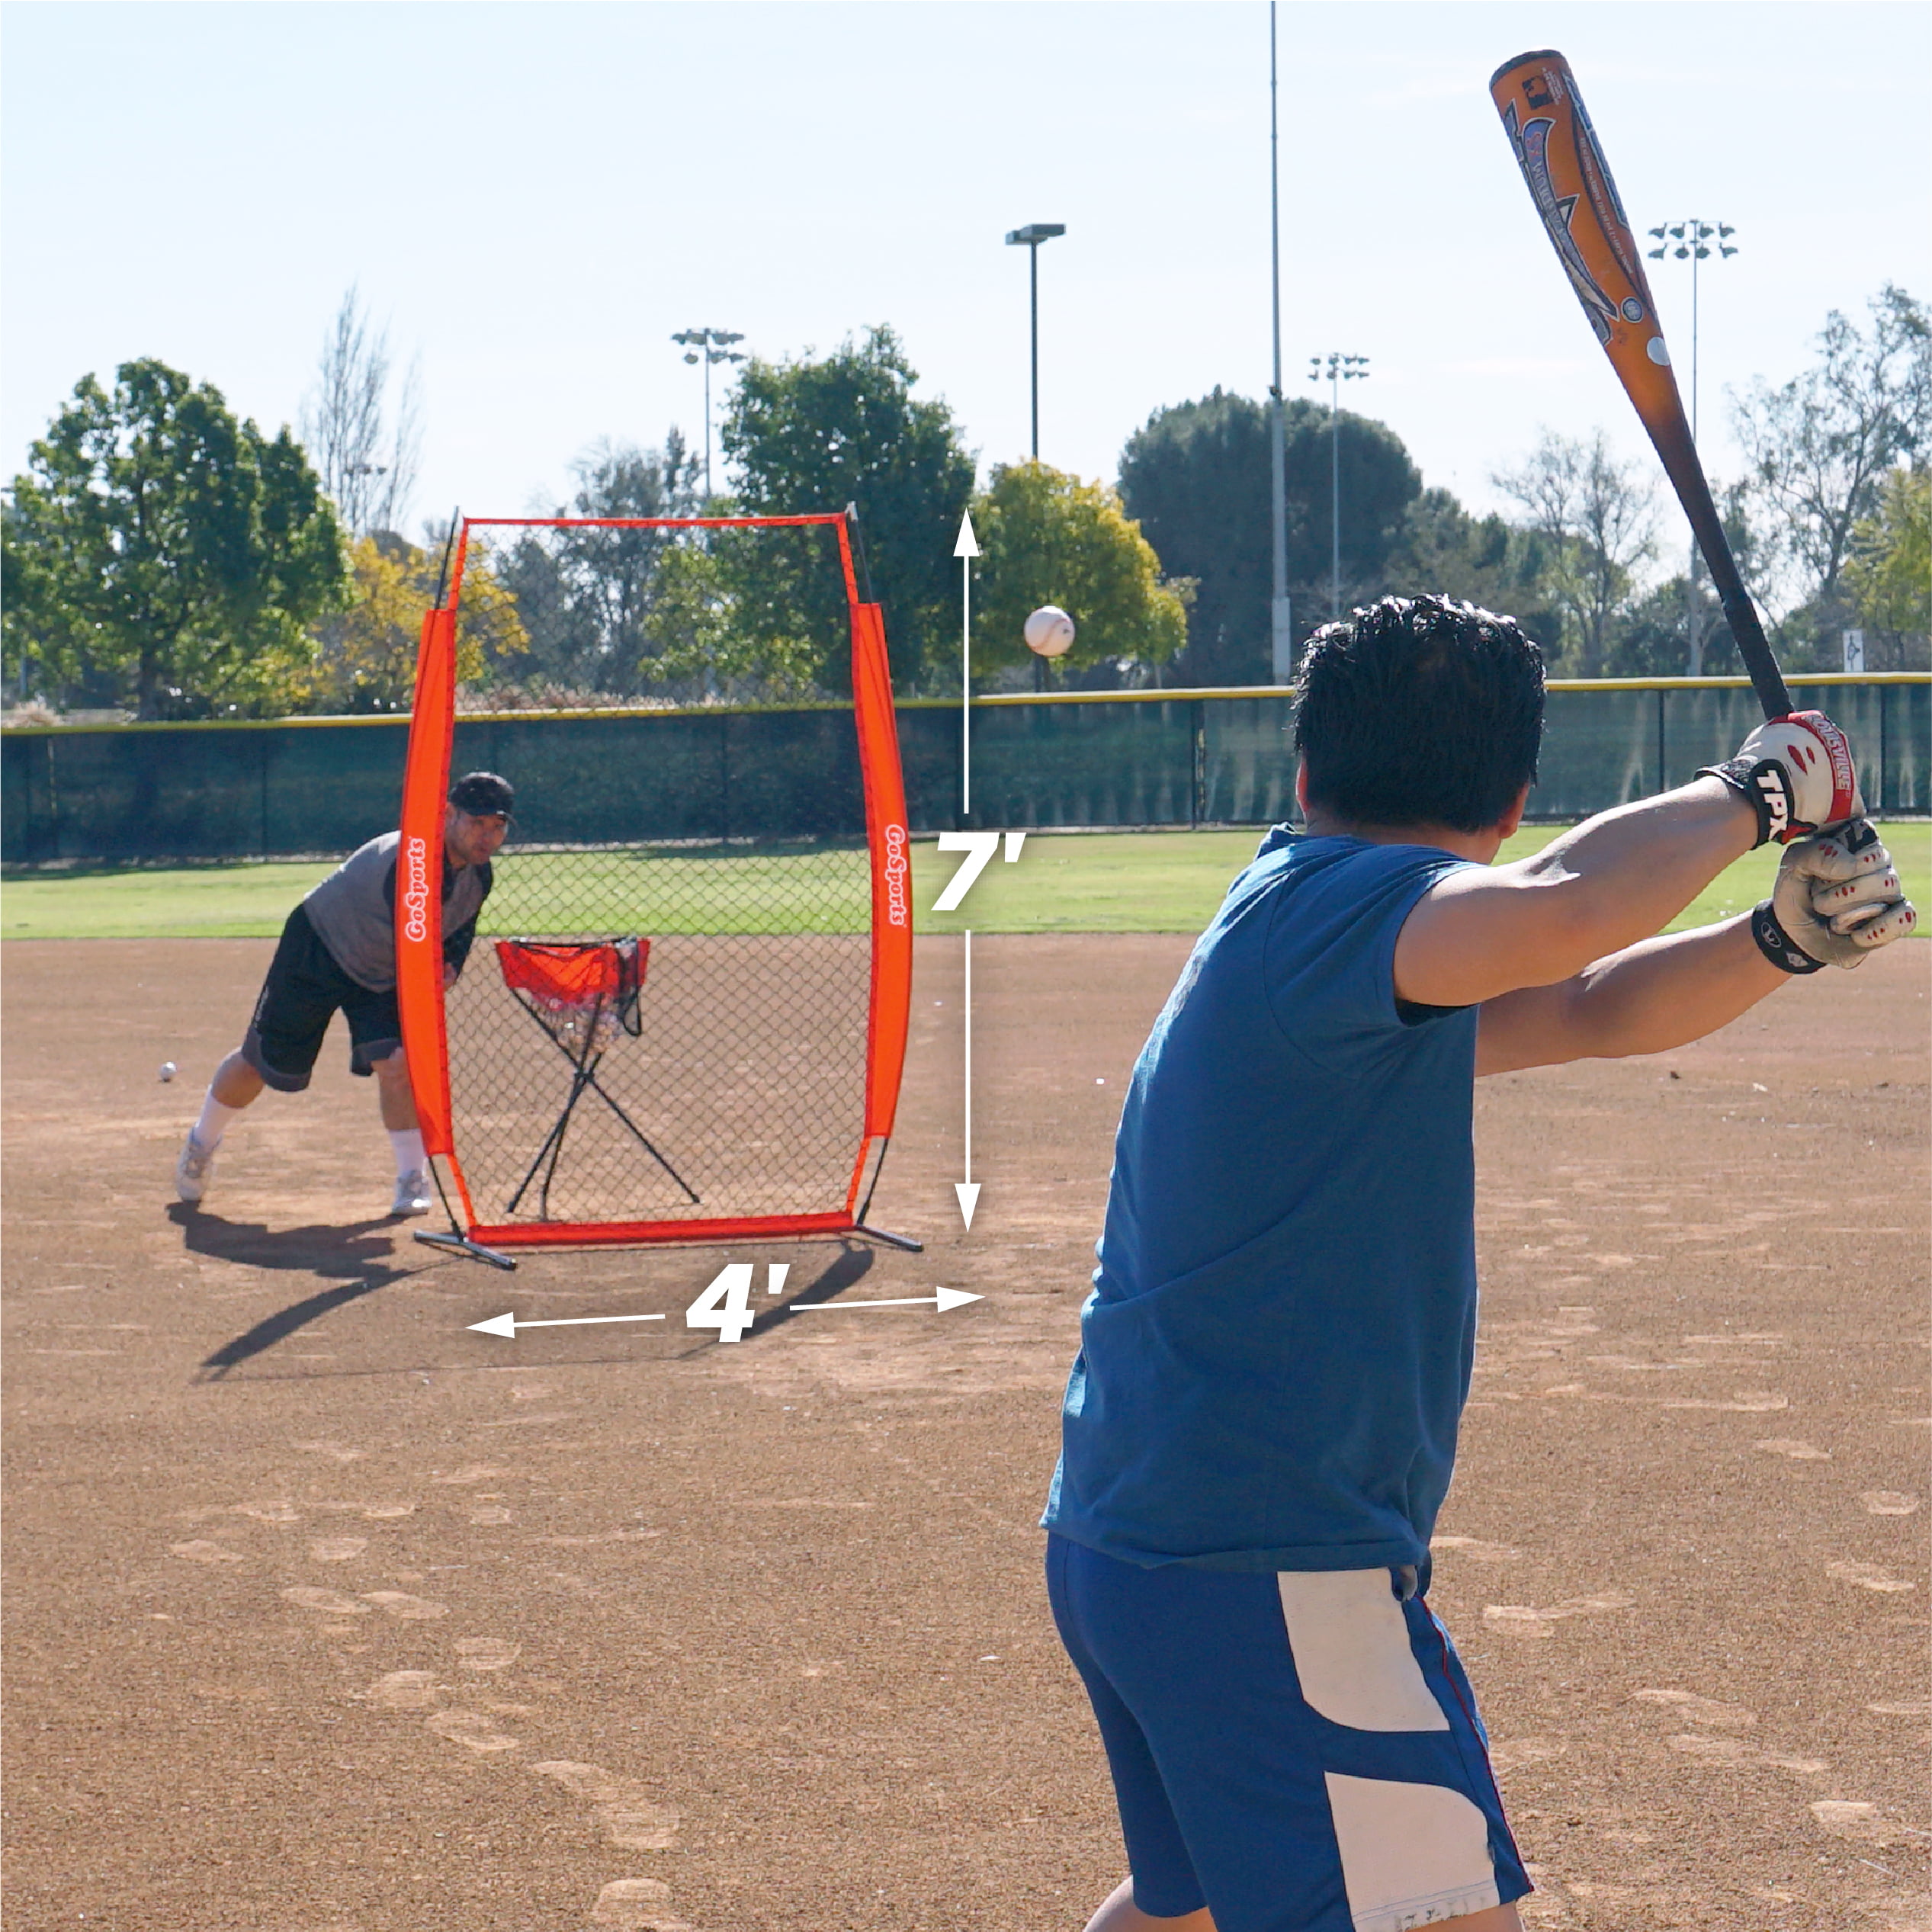 GoSports 7' x 4' I Screen - Baseball  Softball Pitcher Protection Net,  Must Have for Safe Training - Walmart.com